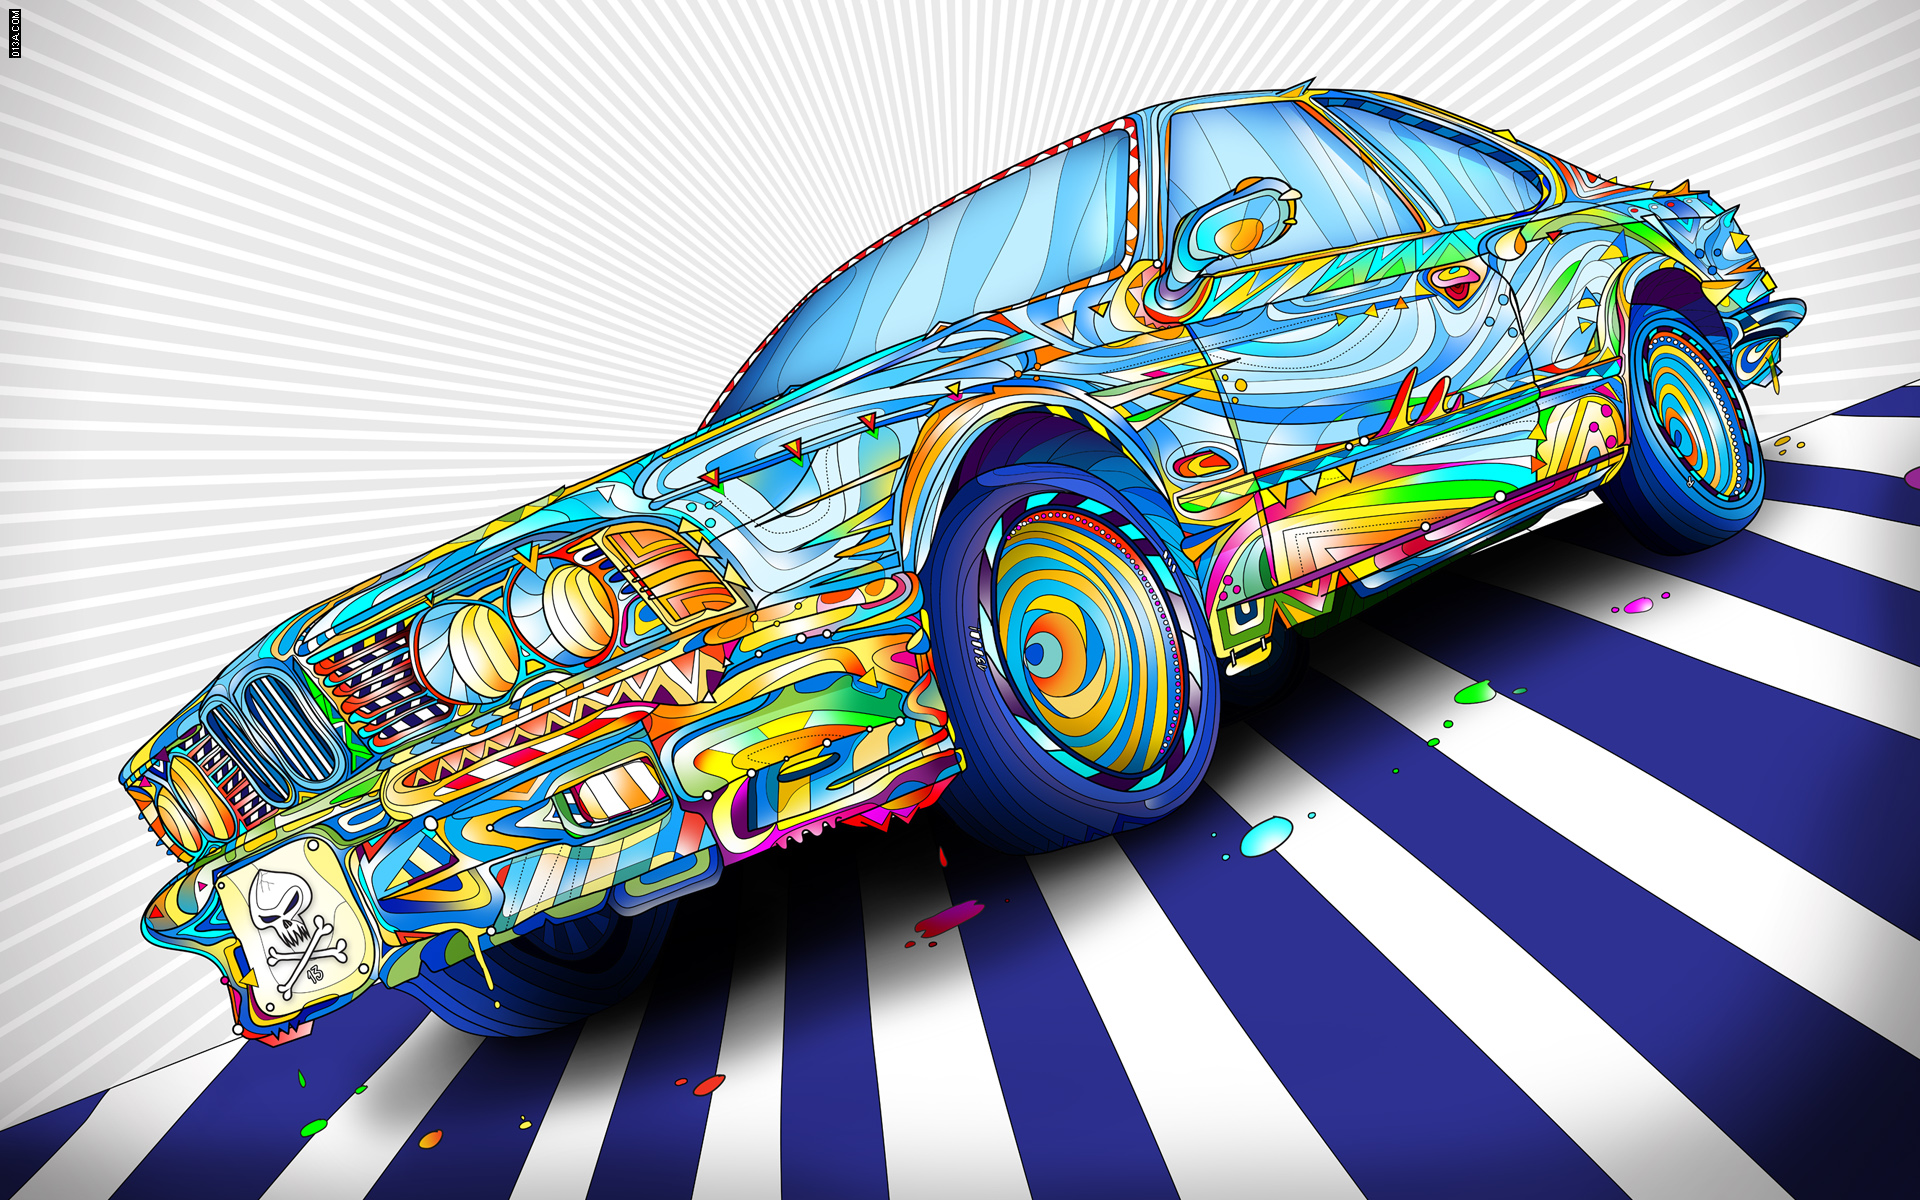 BMW, cars, vivid colors, fan art, Matei Apostolescu - desktop wallpaper